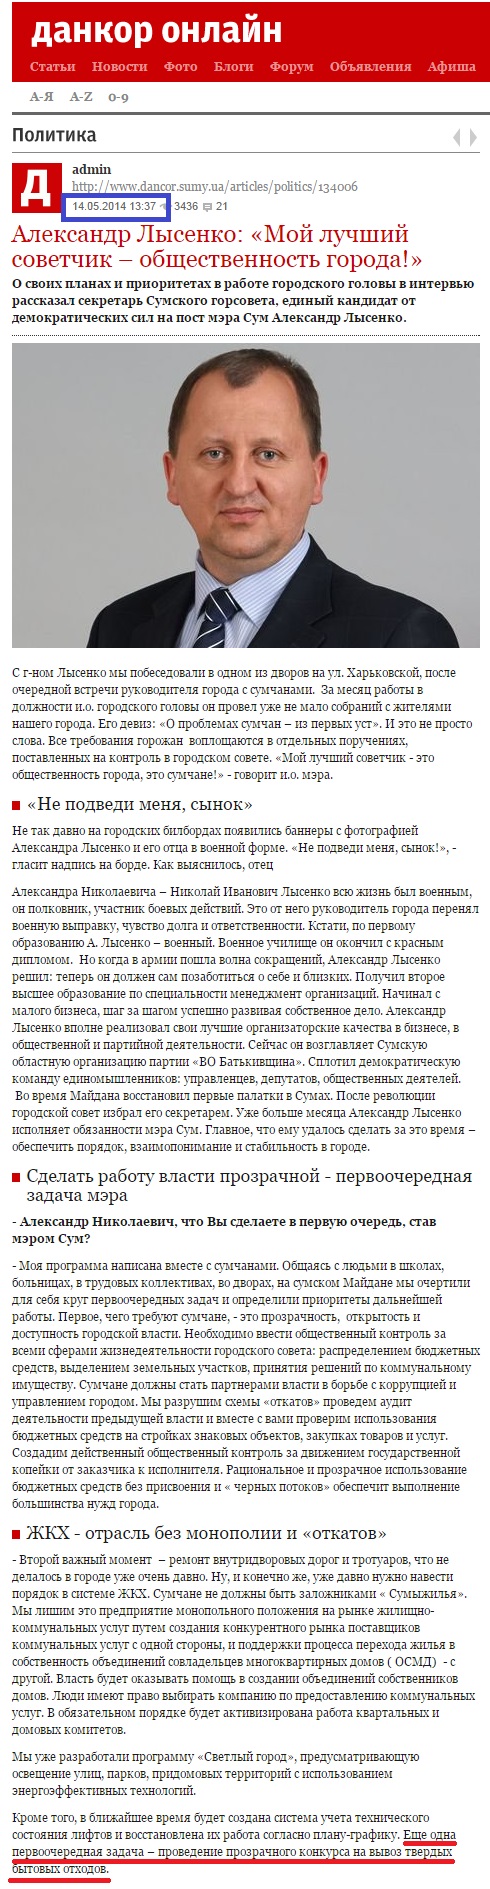 http://www.dancor.sumy.ua/articles/politics/134006#sel=